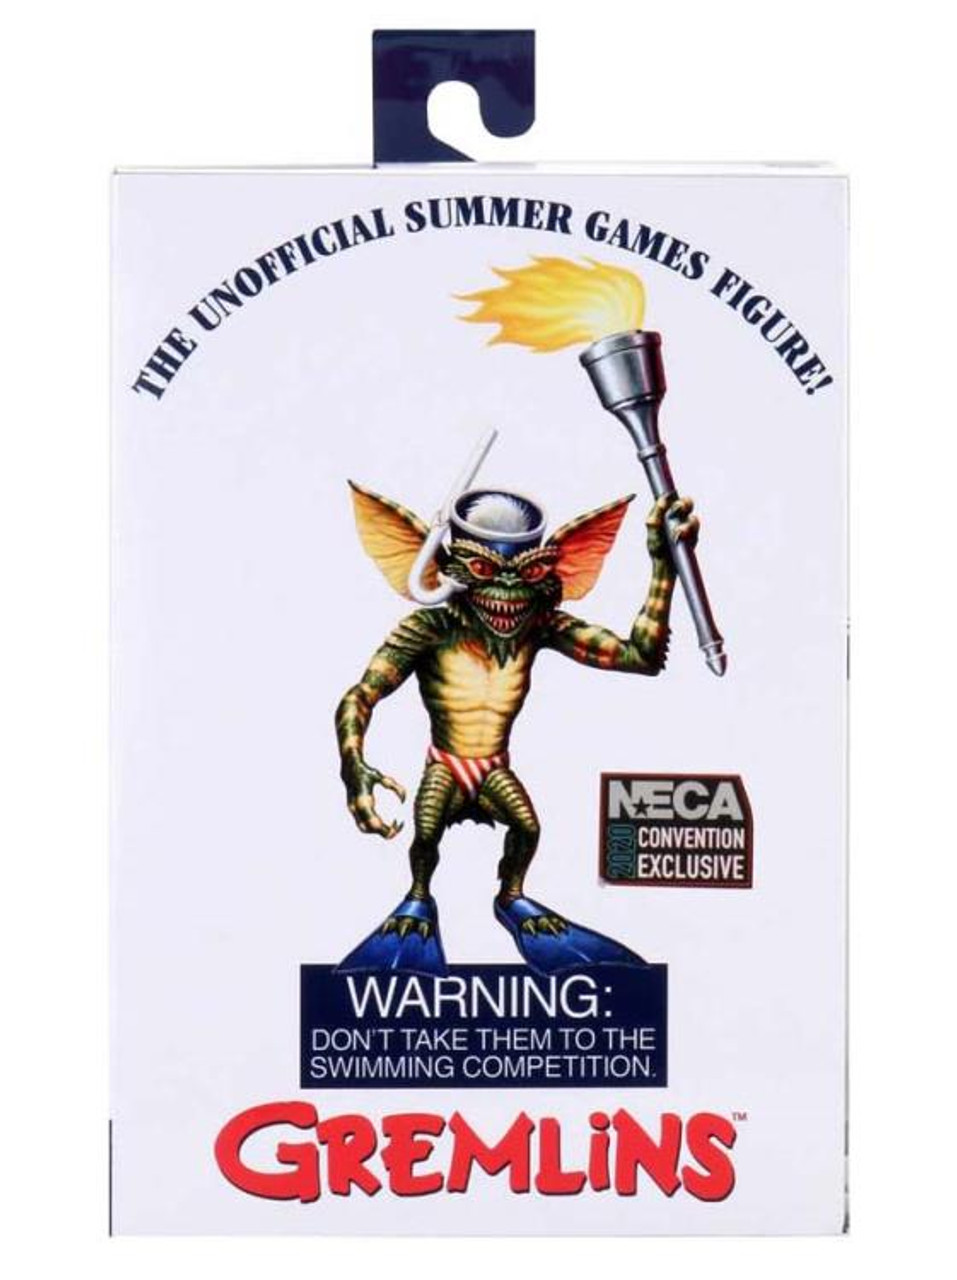 NECA Gremlins The Unofficial Summer Games Gremlin